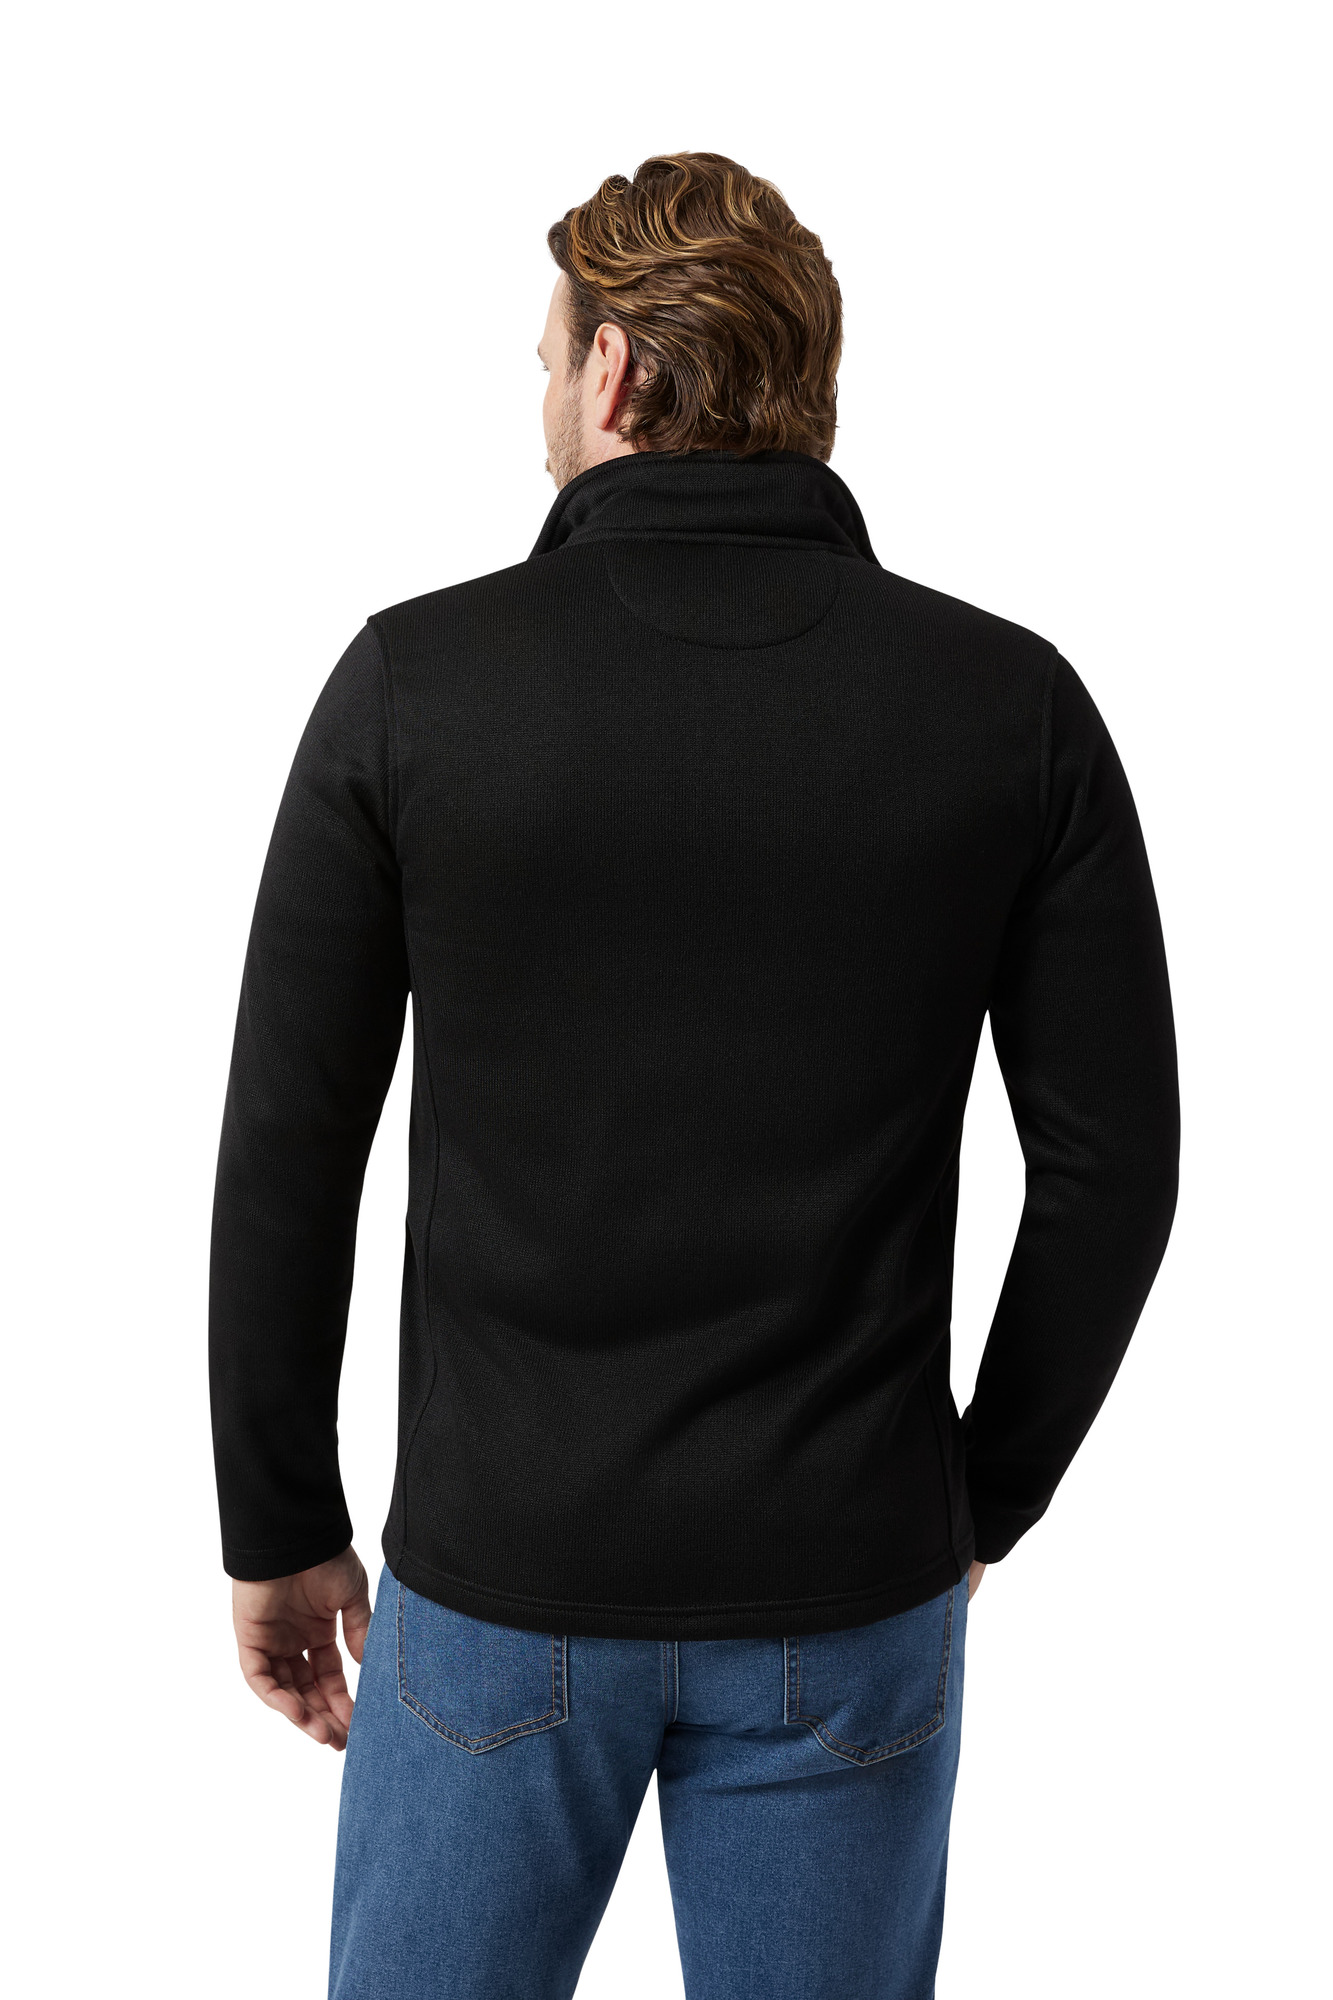 Chaps Men's & Big Men's Sherpa Lined Fleece Snap Front Sweater Jacket - image 2 of 5